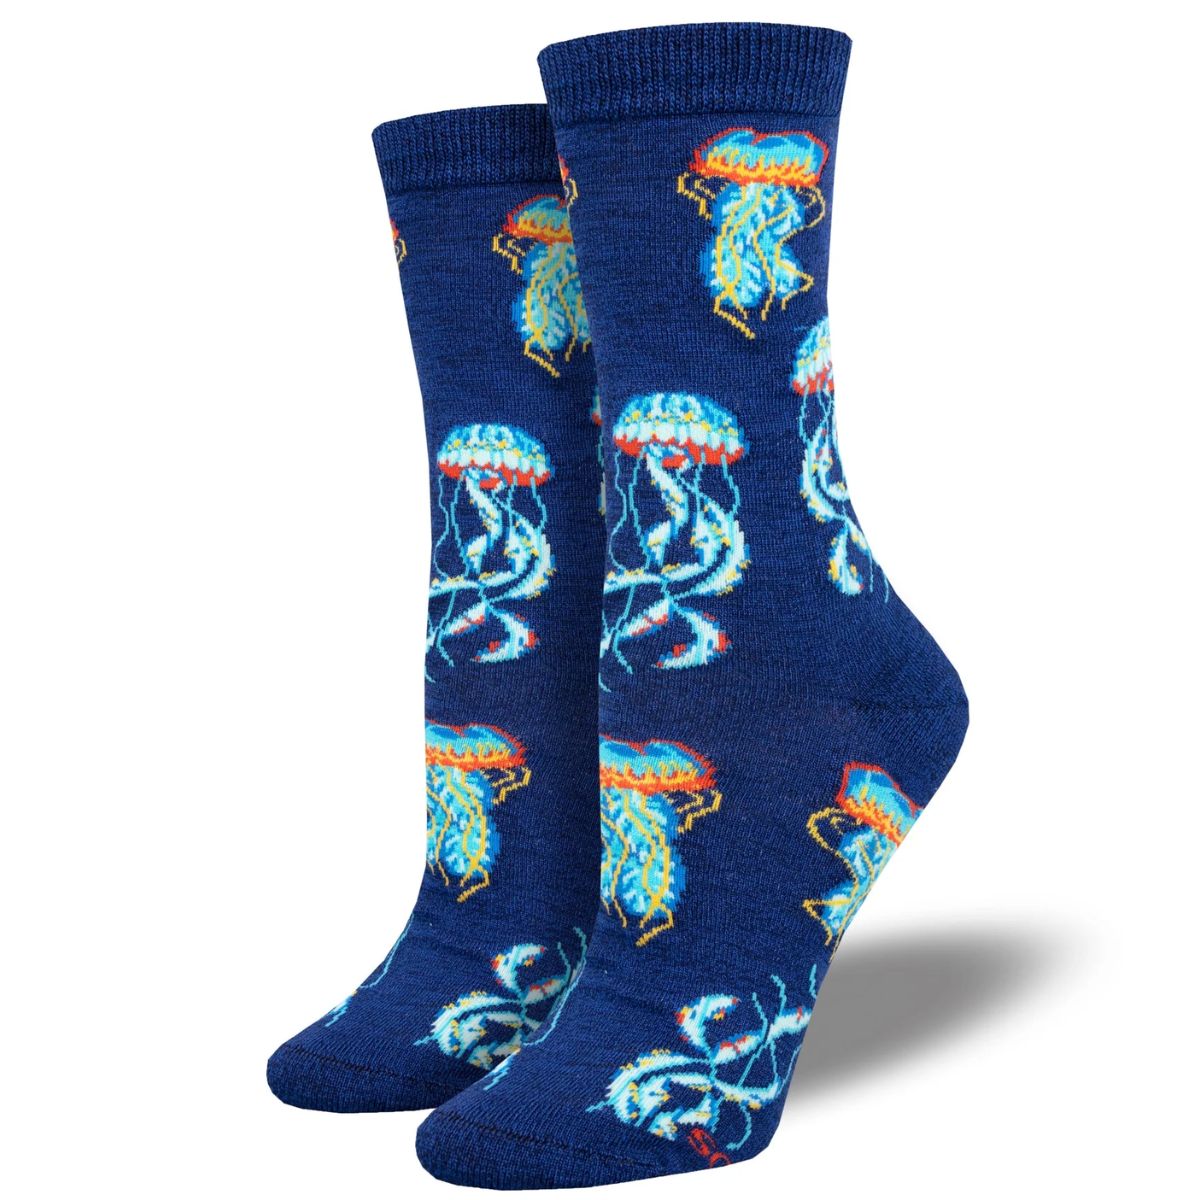 Deep sea jellies socks a pair of blue socks with jellyfish print. 